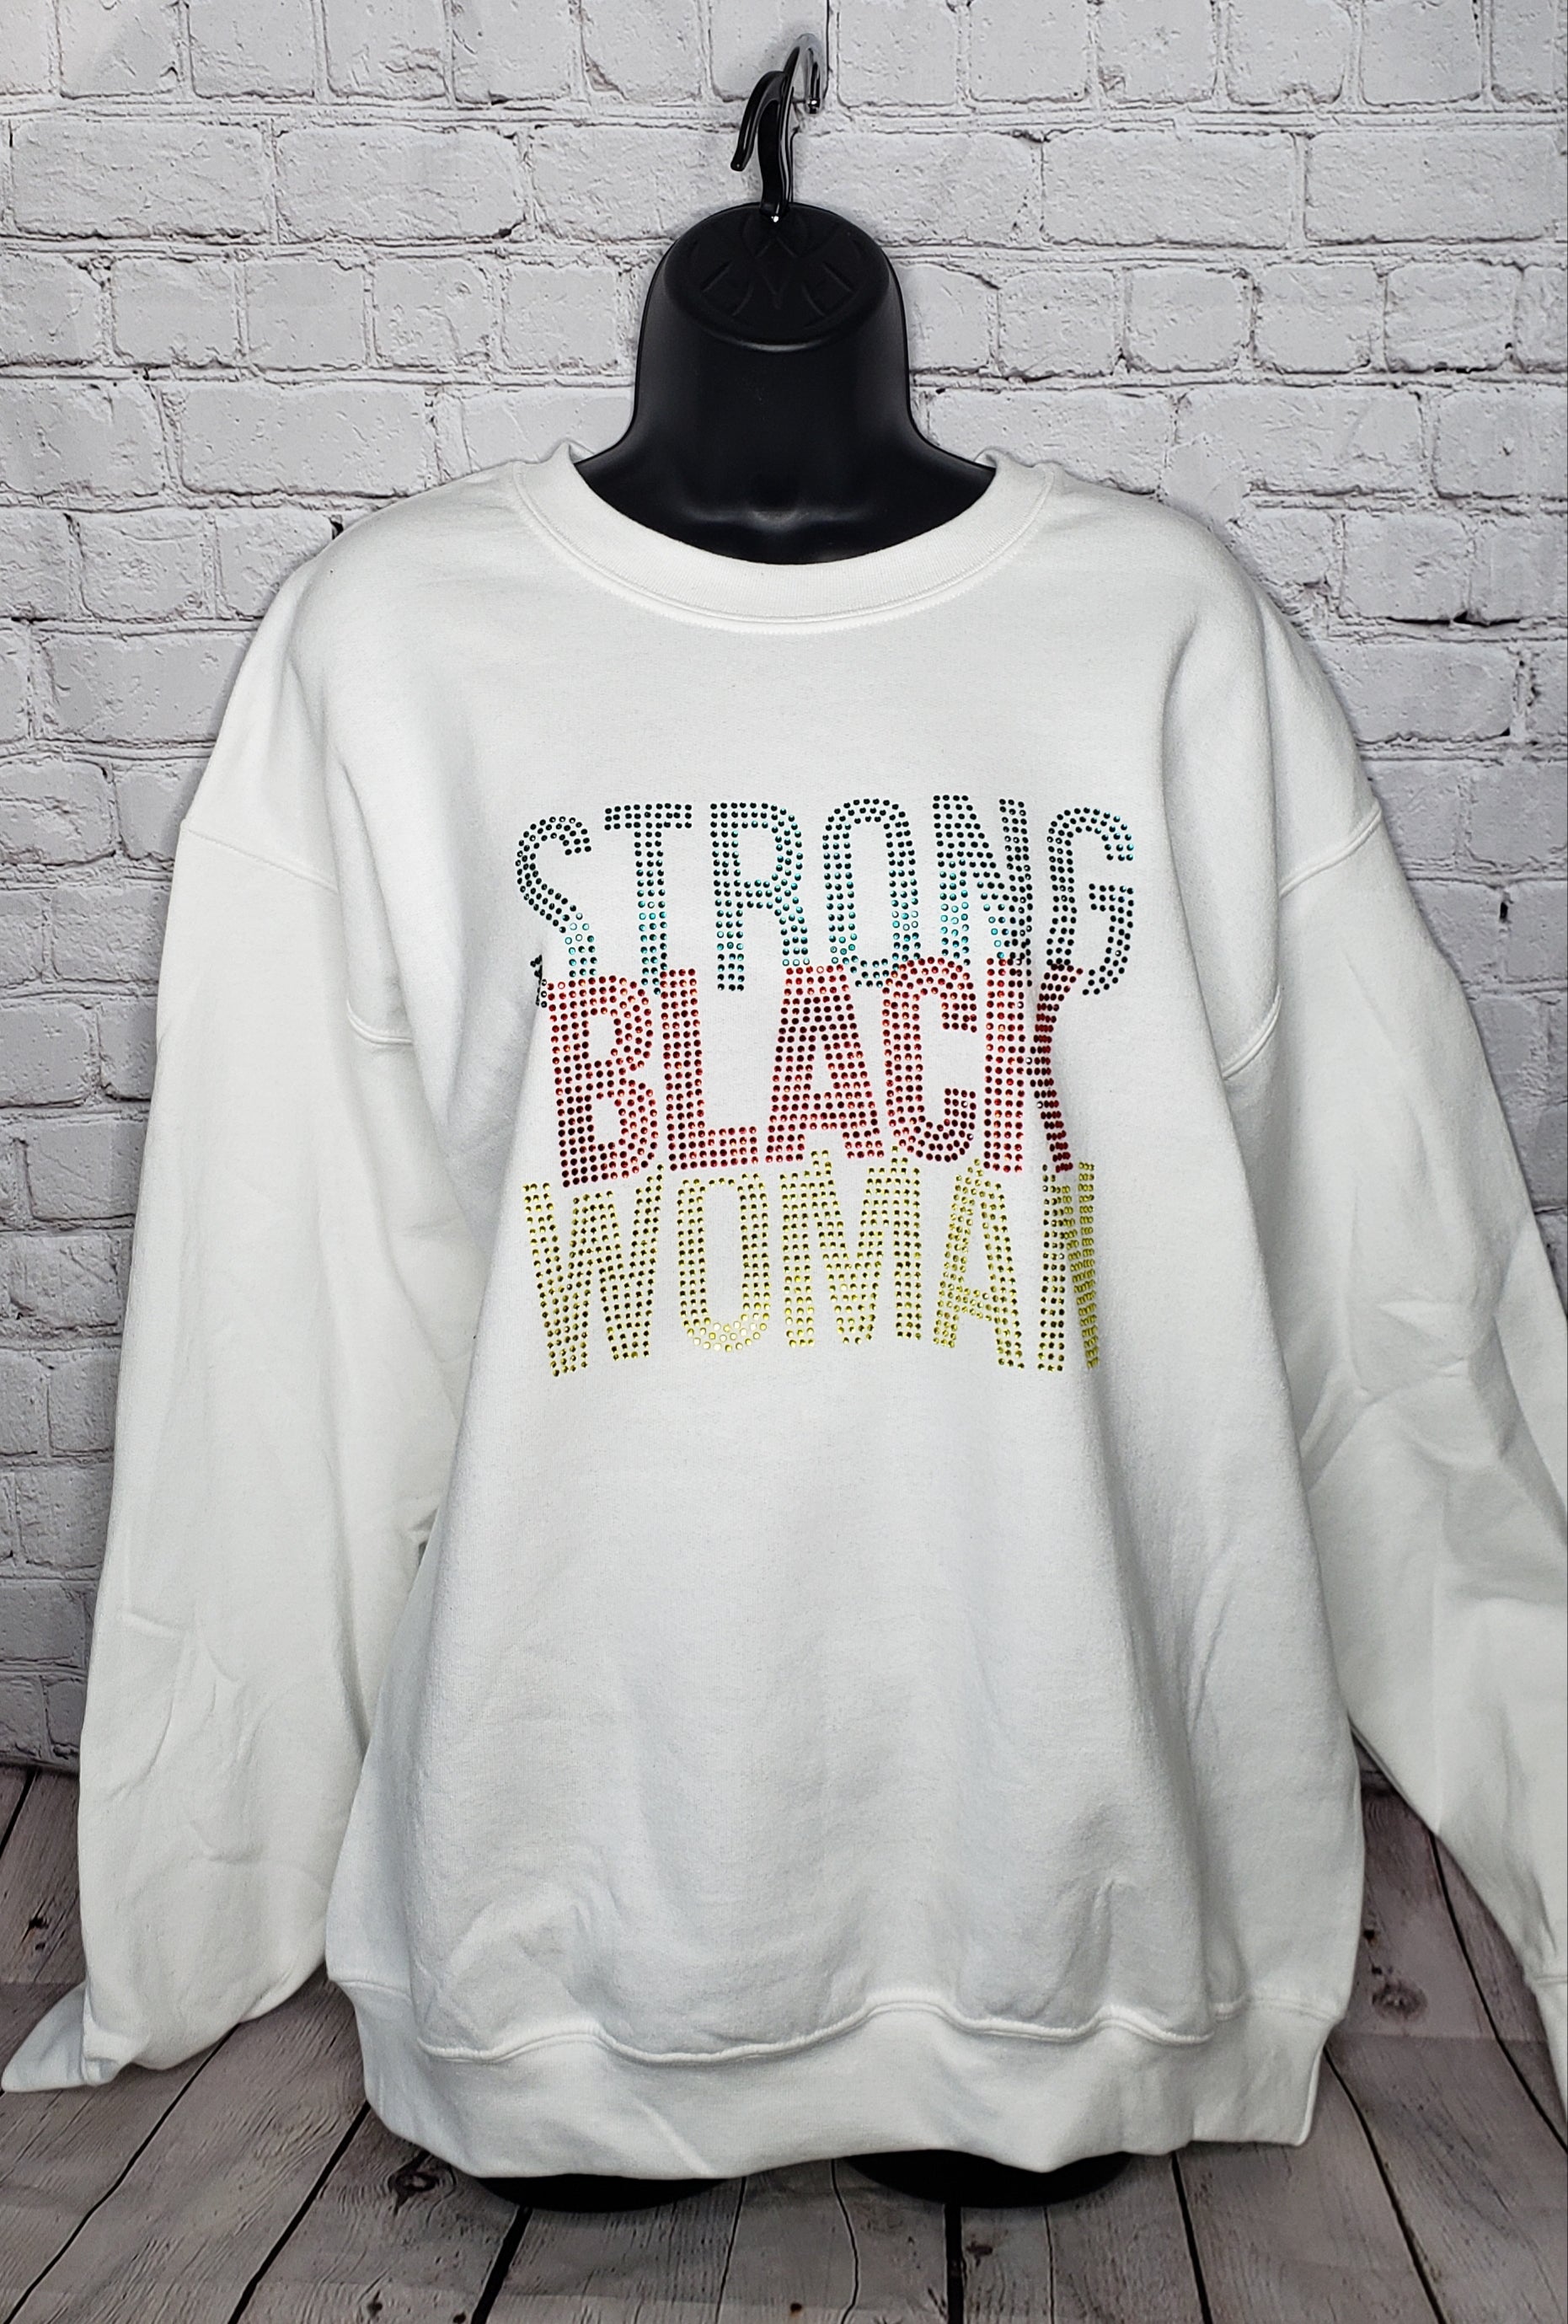 Strong Black Woman Rhinestone Sweatshirt- Large Unisex